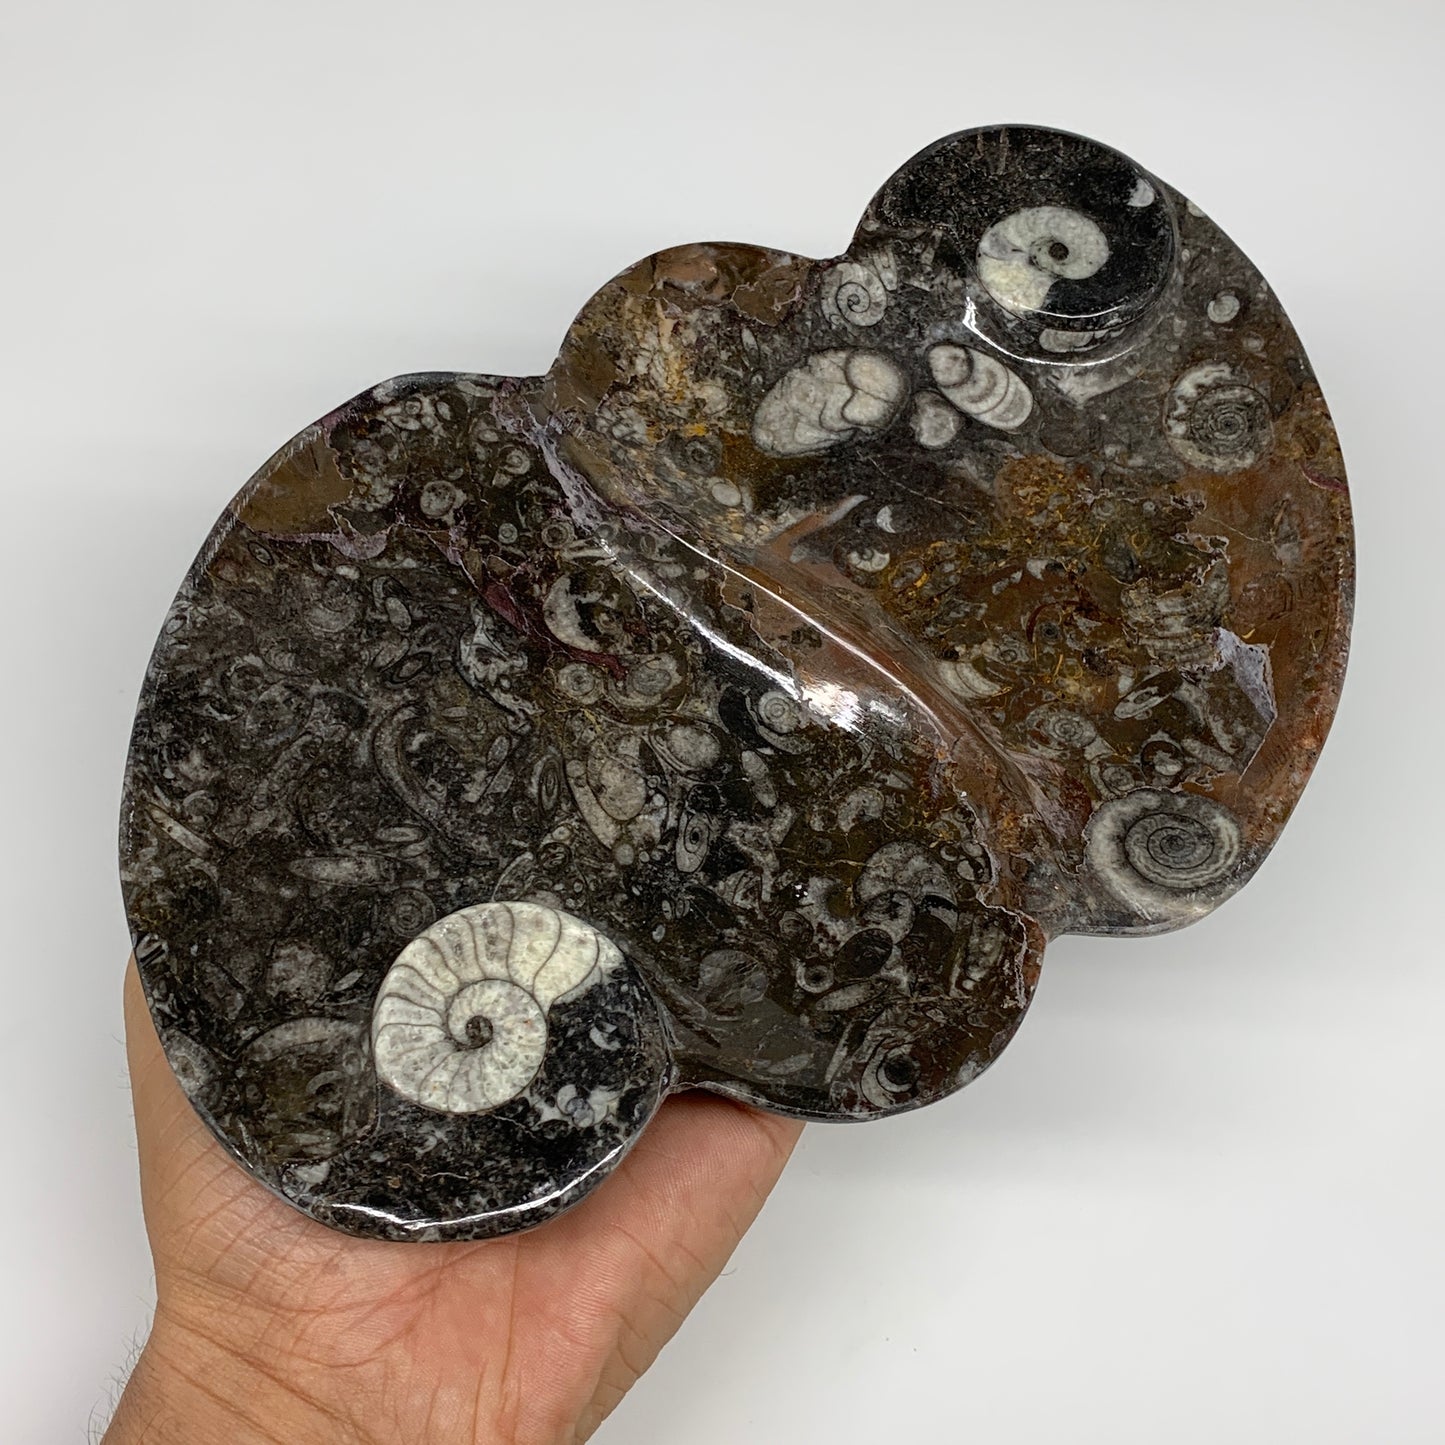 2pcs Set,8.5"x5.5" Double Heart Fossils Orthoceras Ammonite Bowls @Morocco,B8511